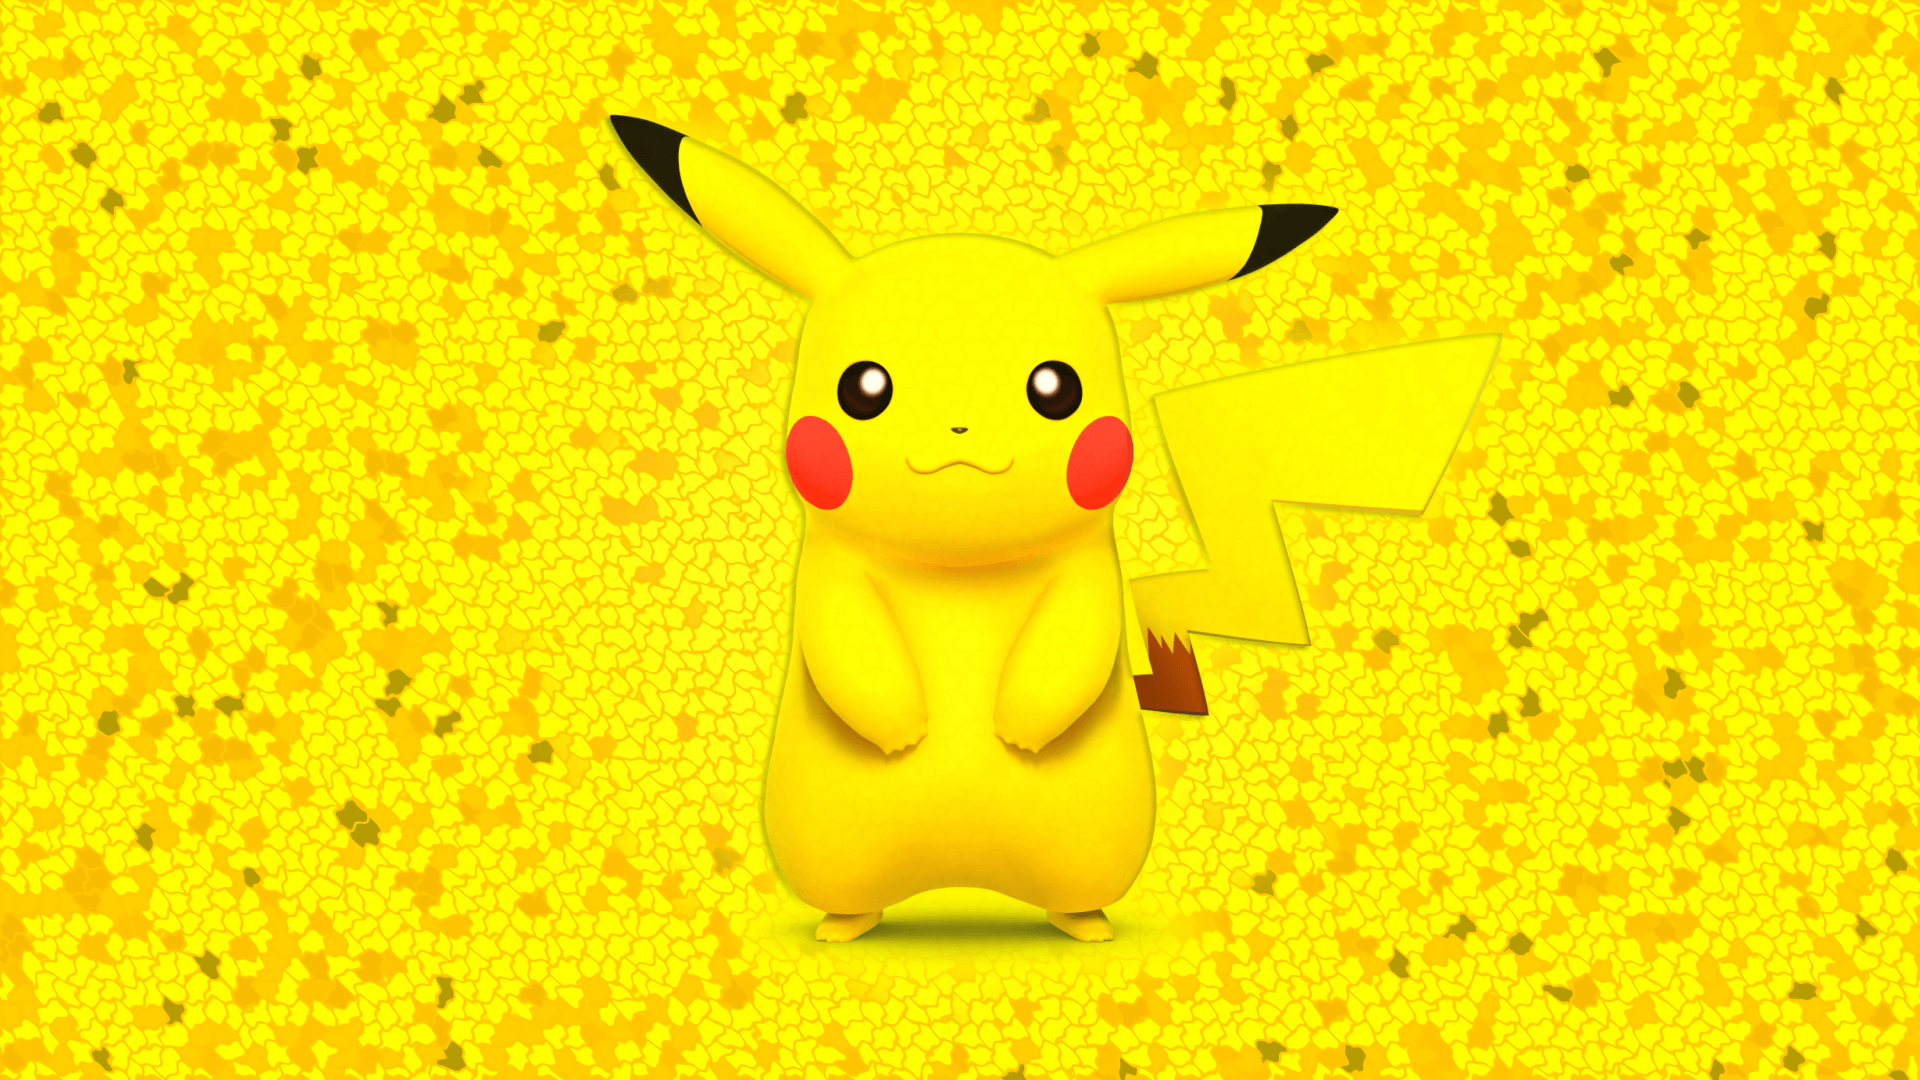 Pikachu 3D Wallpapers - Los mejores fondos gratuitos de Pikachu 3D